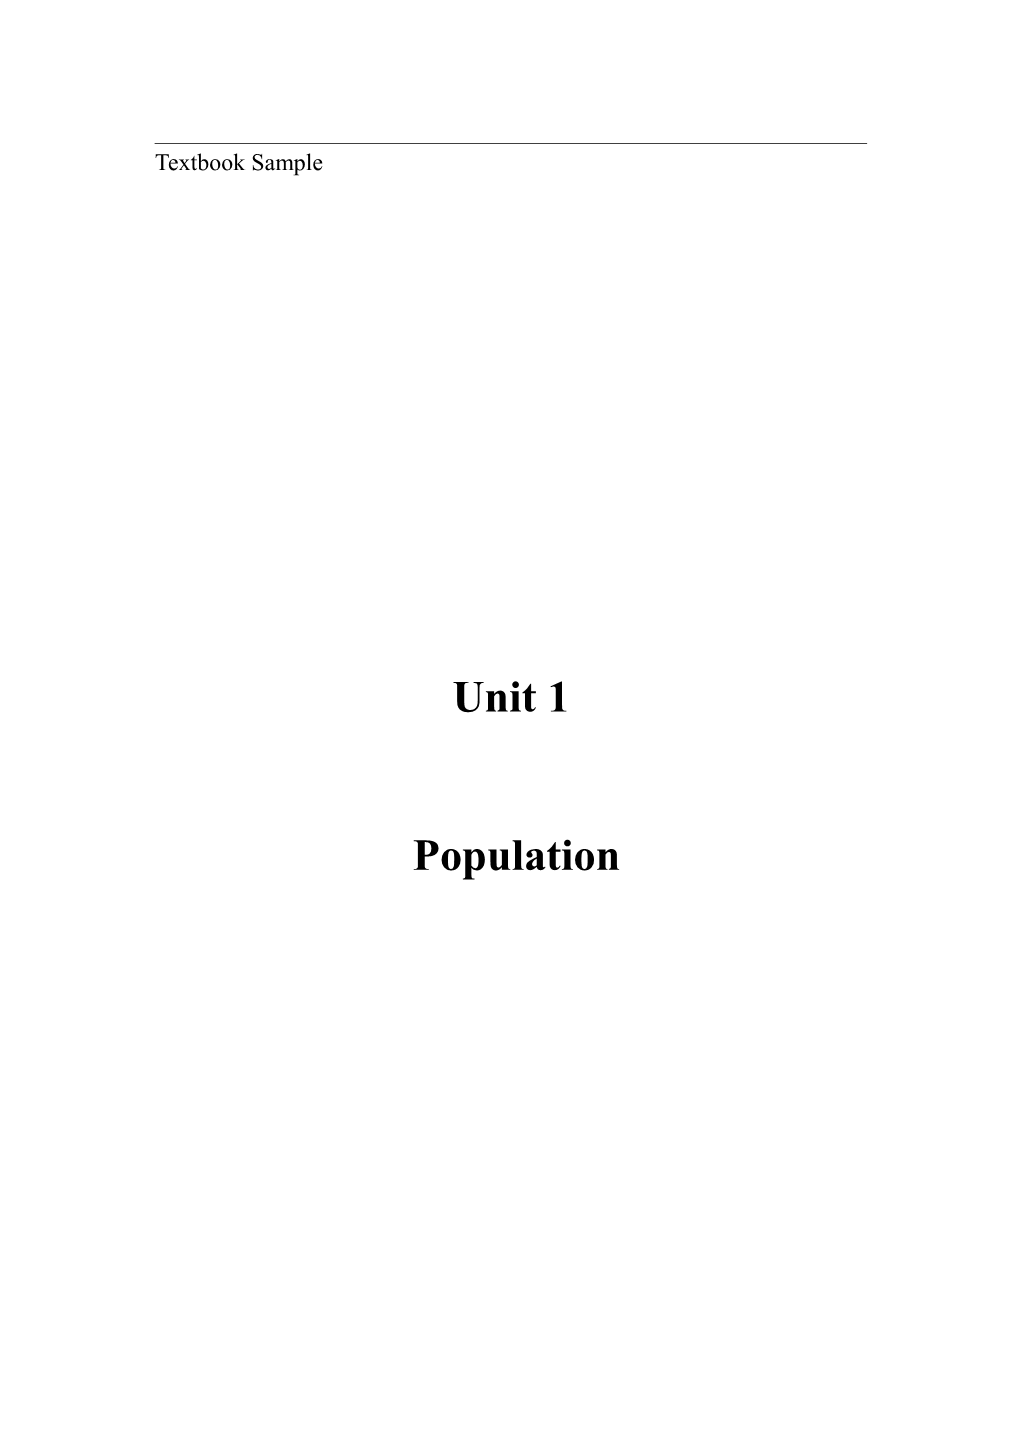 Unit One Population